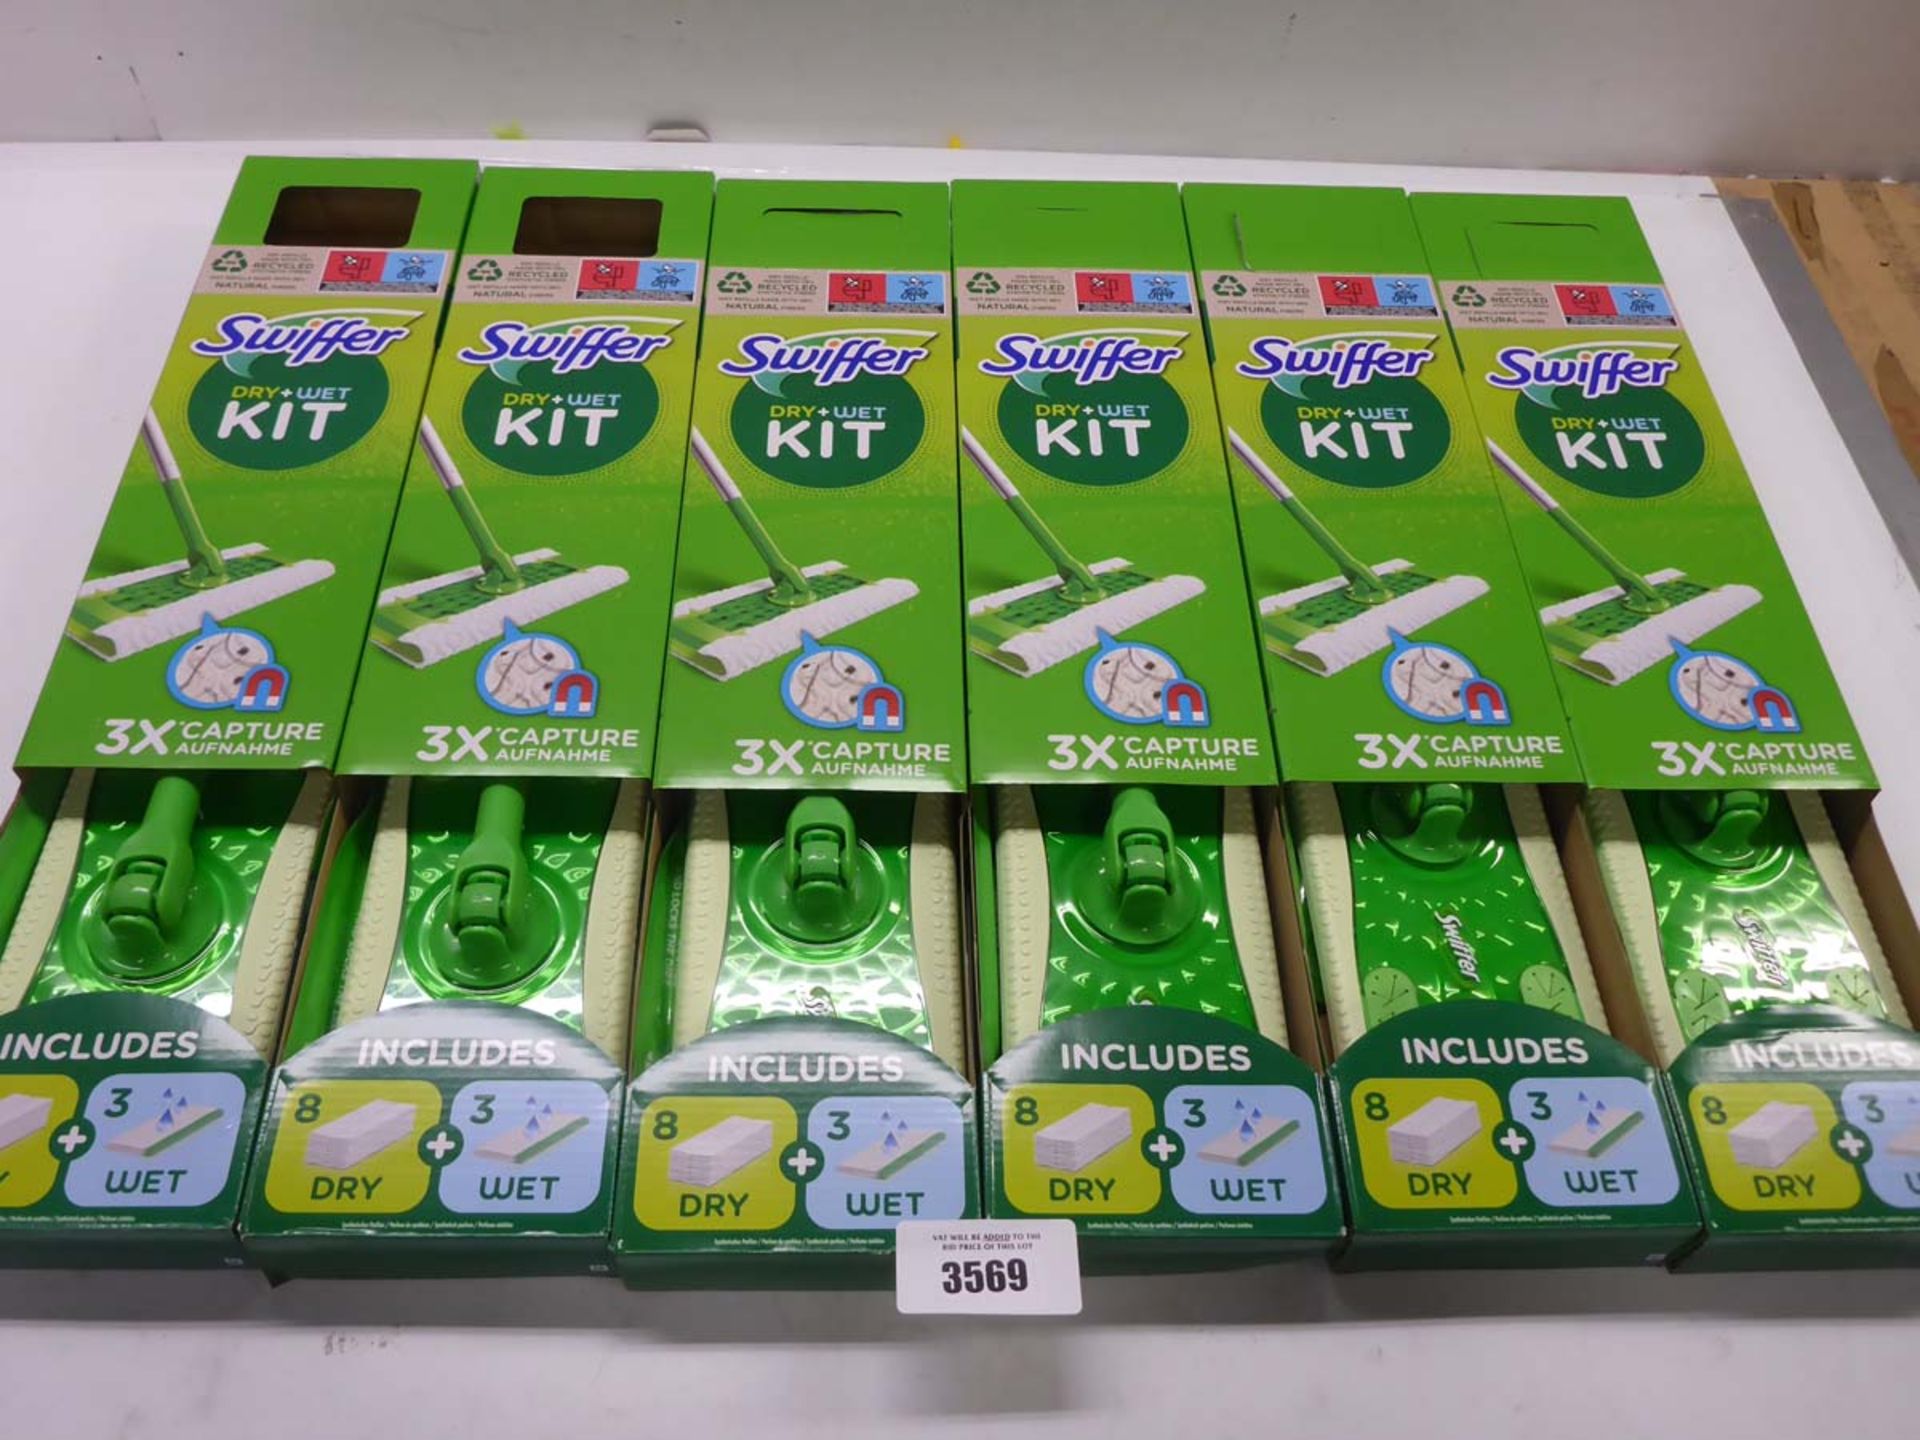 Box of 6 Swiffer dry & wet mop kits